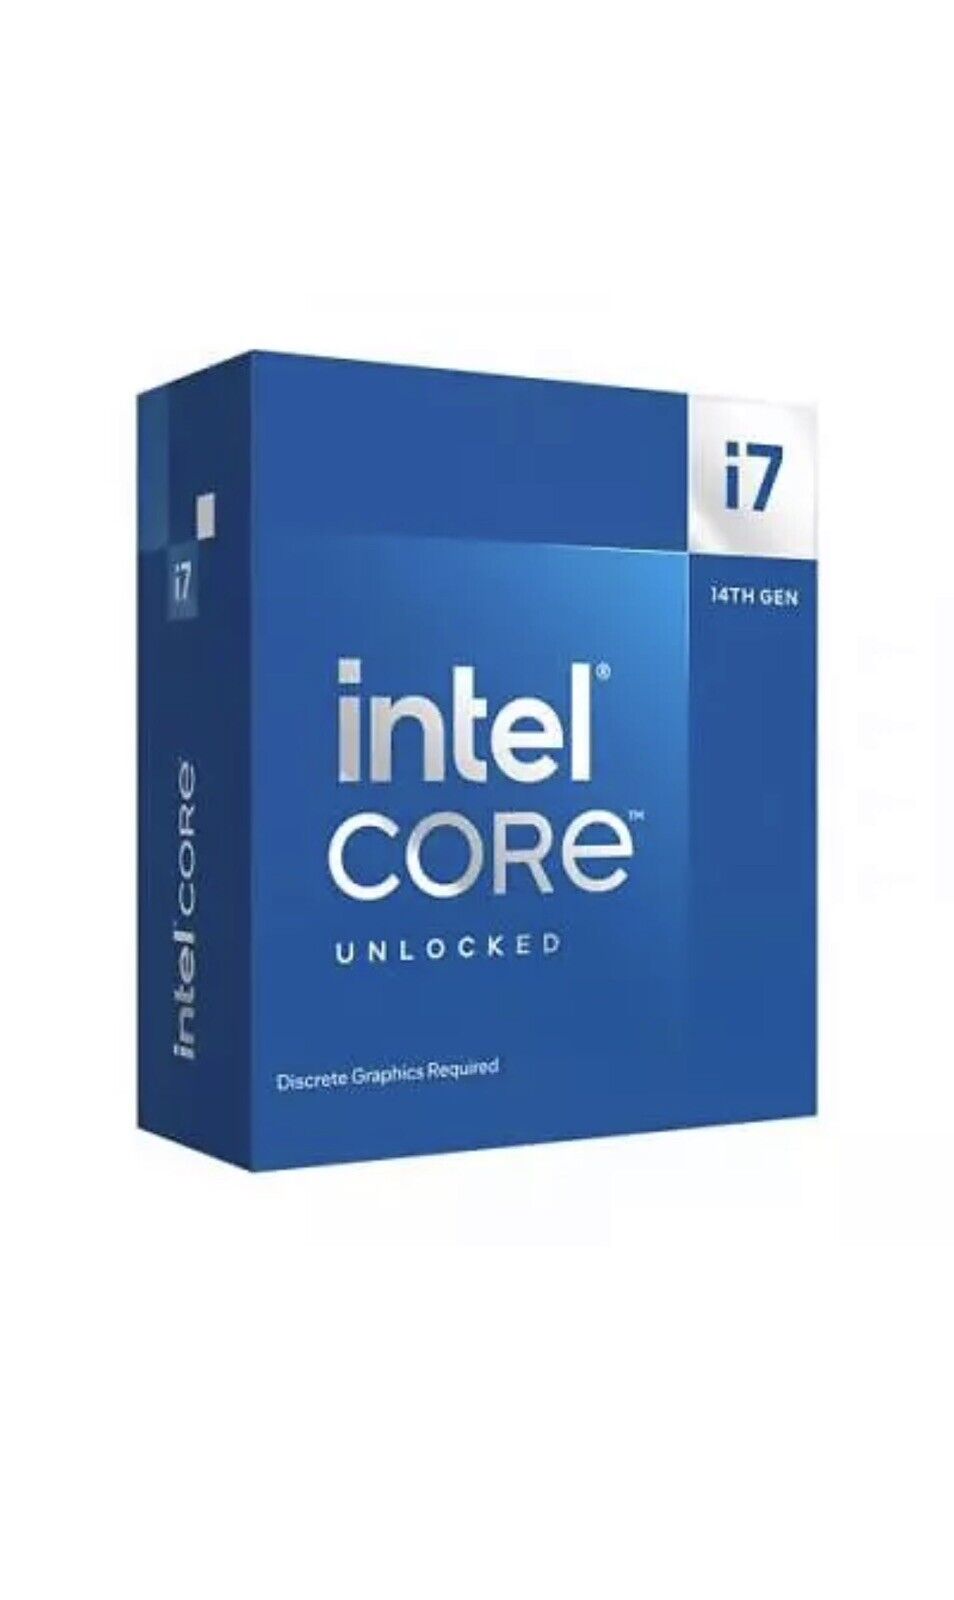 Intel Core i7-14700KF Unlocked Desktop Processor